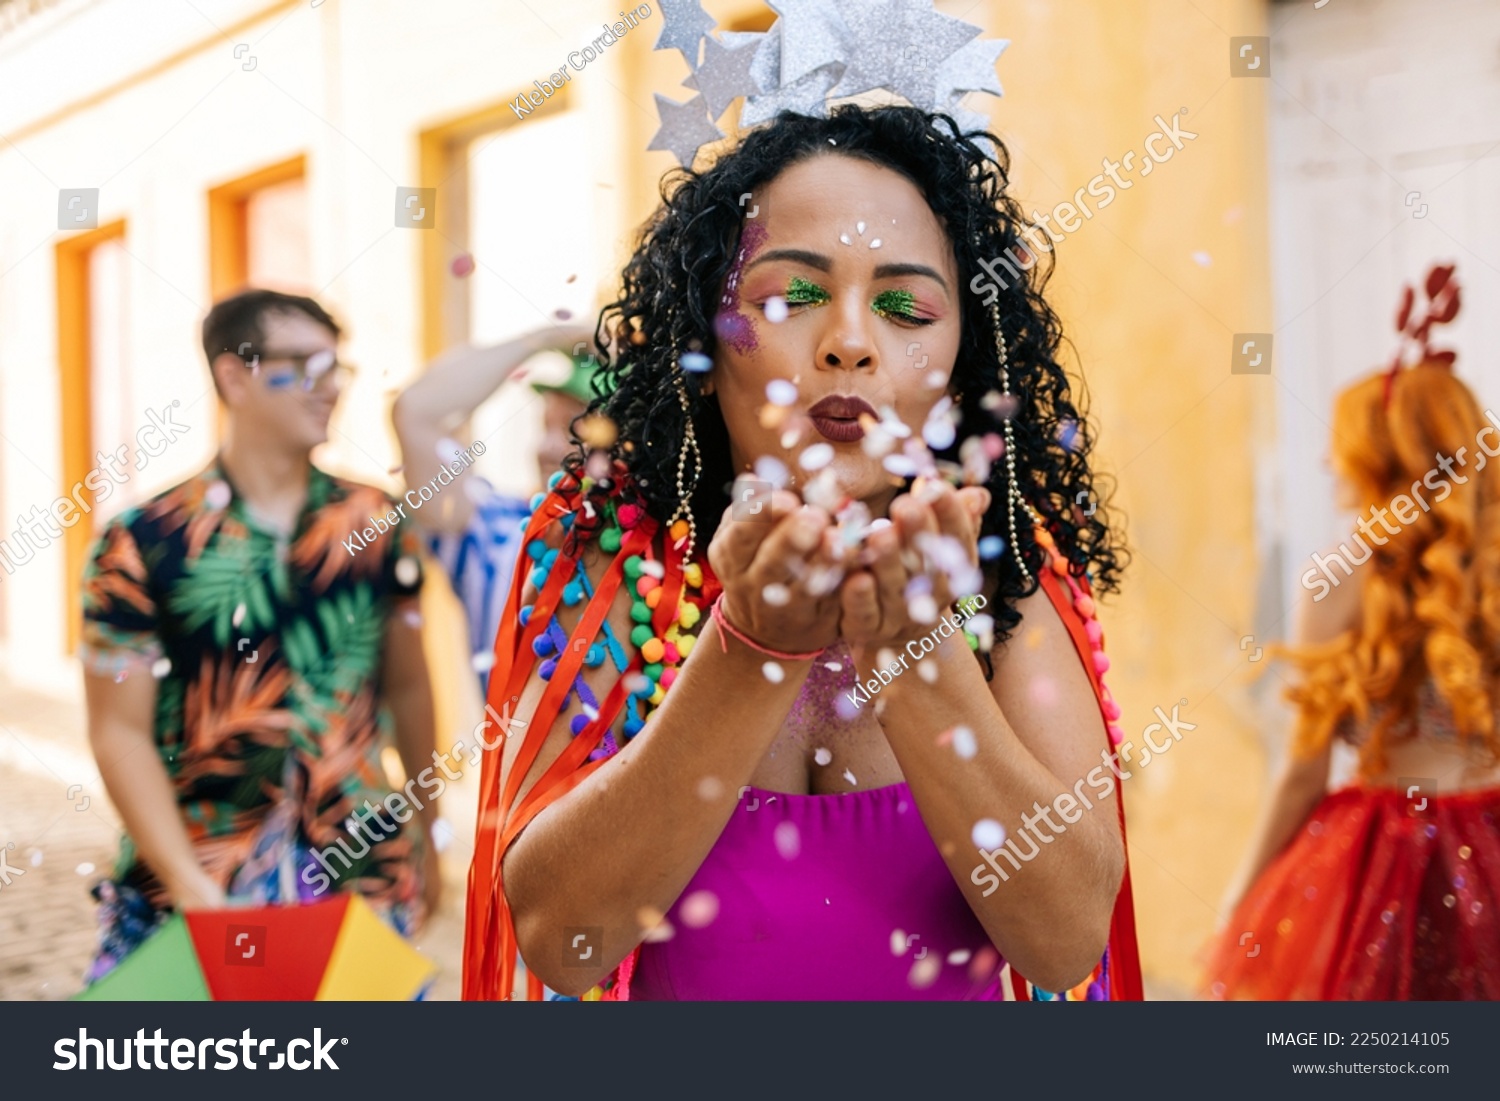 Brazilian Carnival. Young woman enjoying the carnival party blowing confetti #2250214105